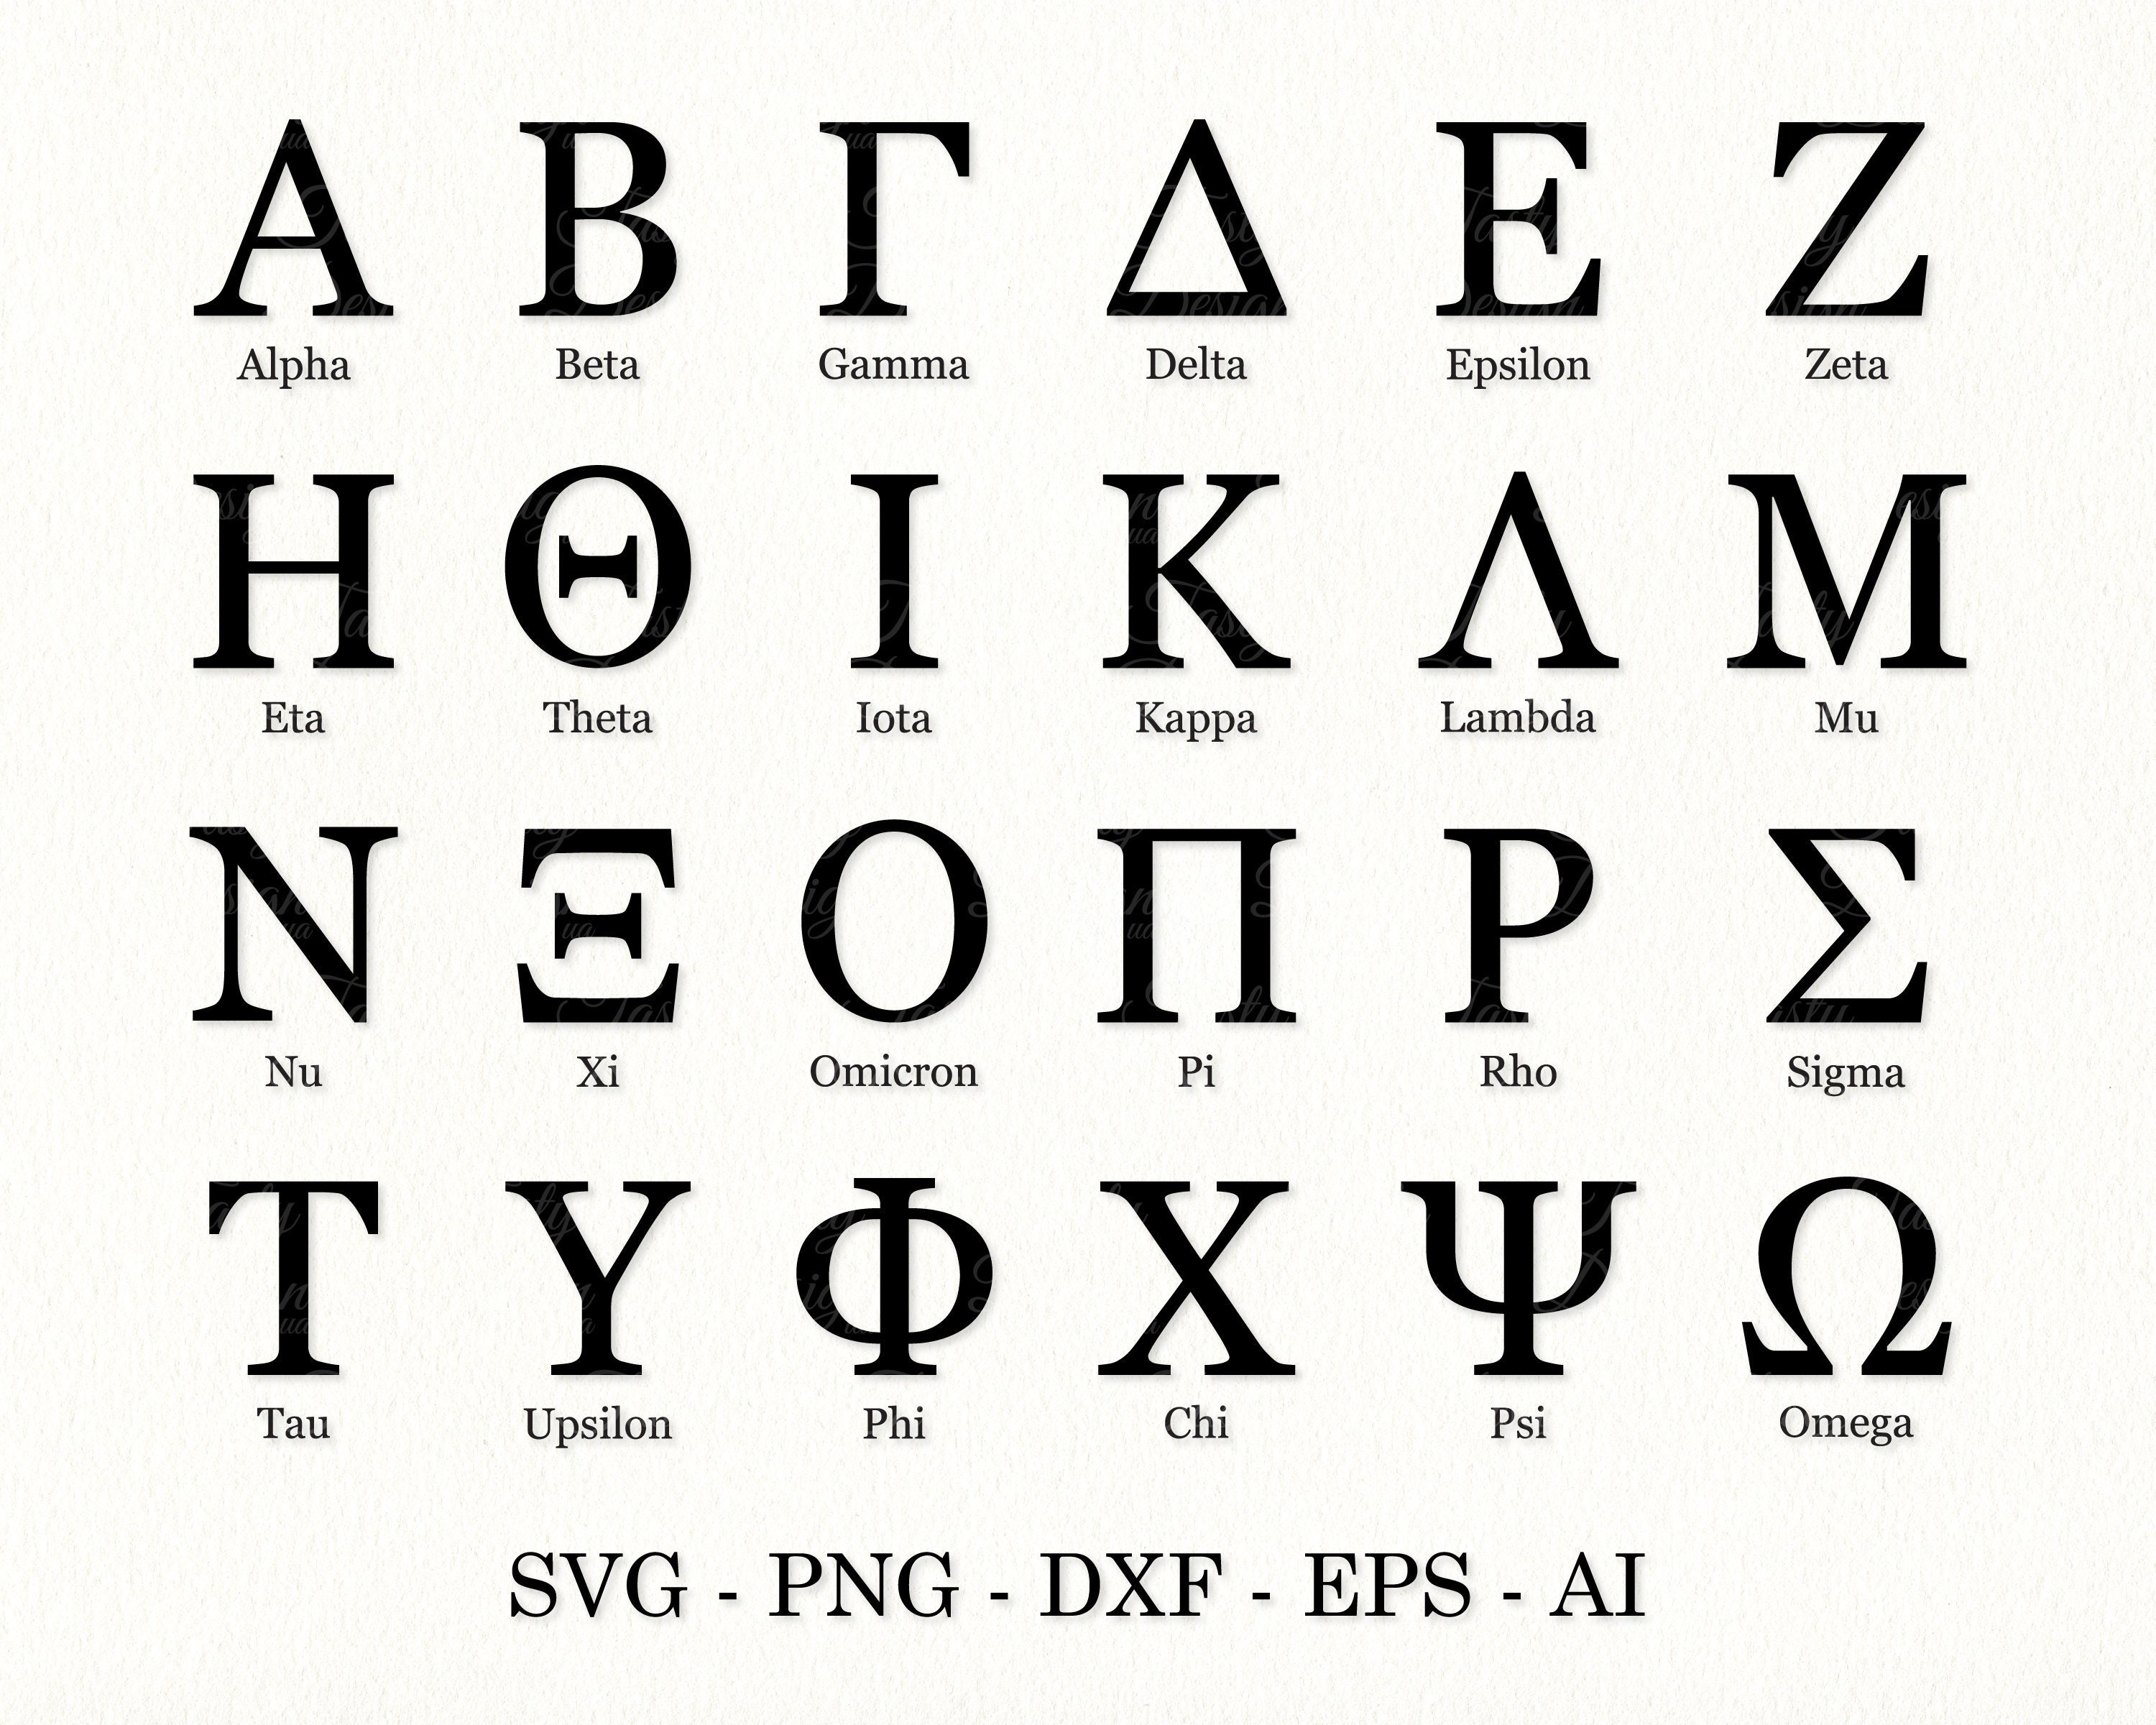 Ancient Greek Alphabet Font